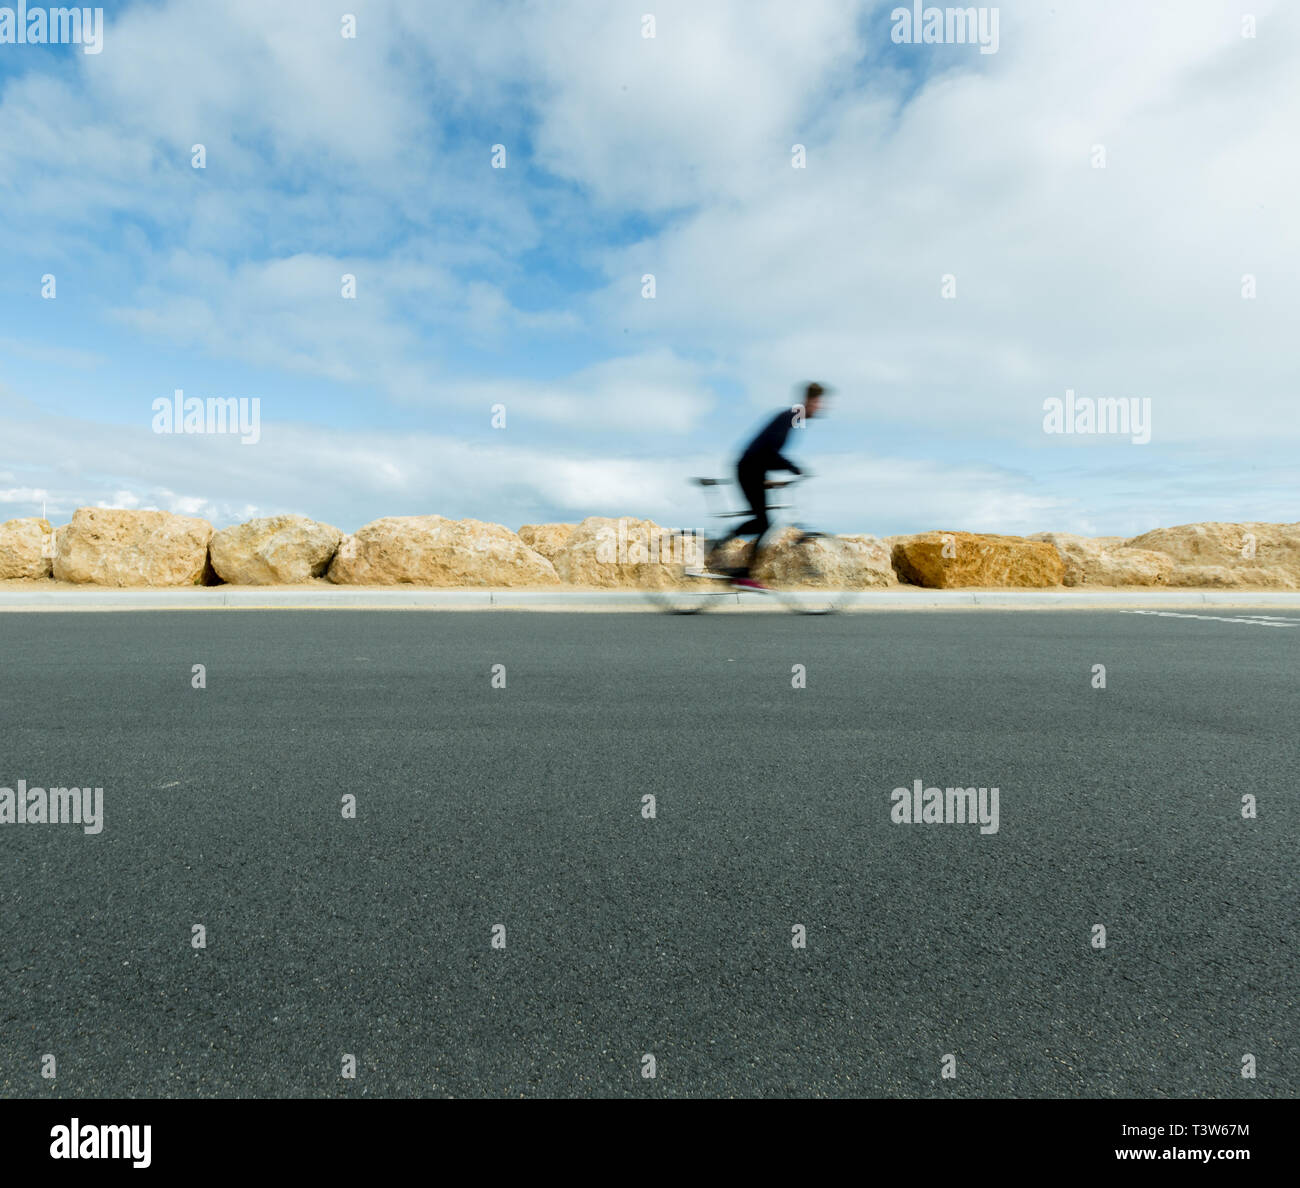 Bicycle riding motion blur Stock Photo